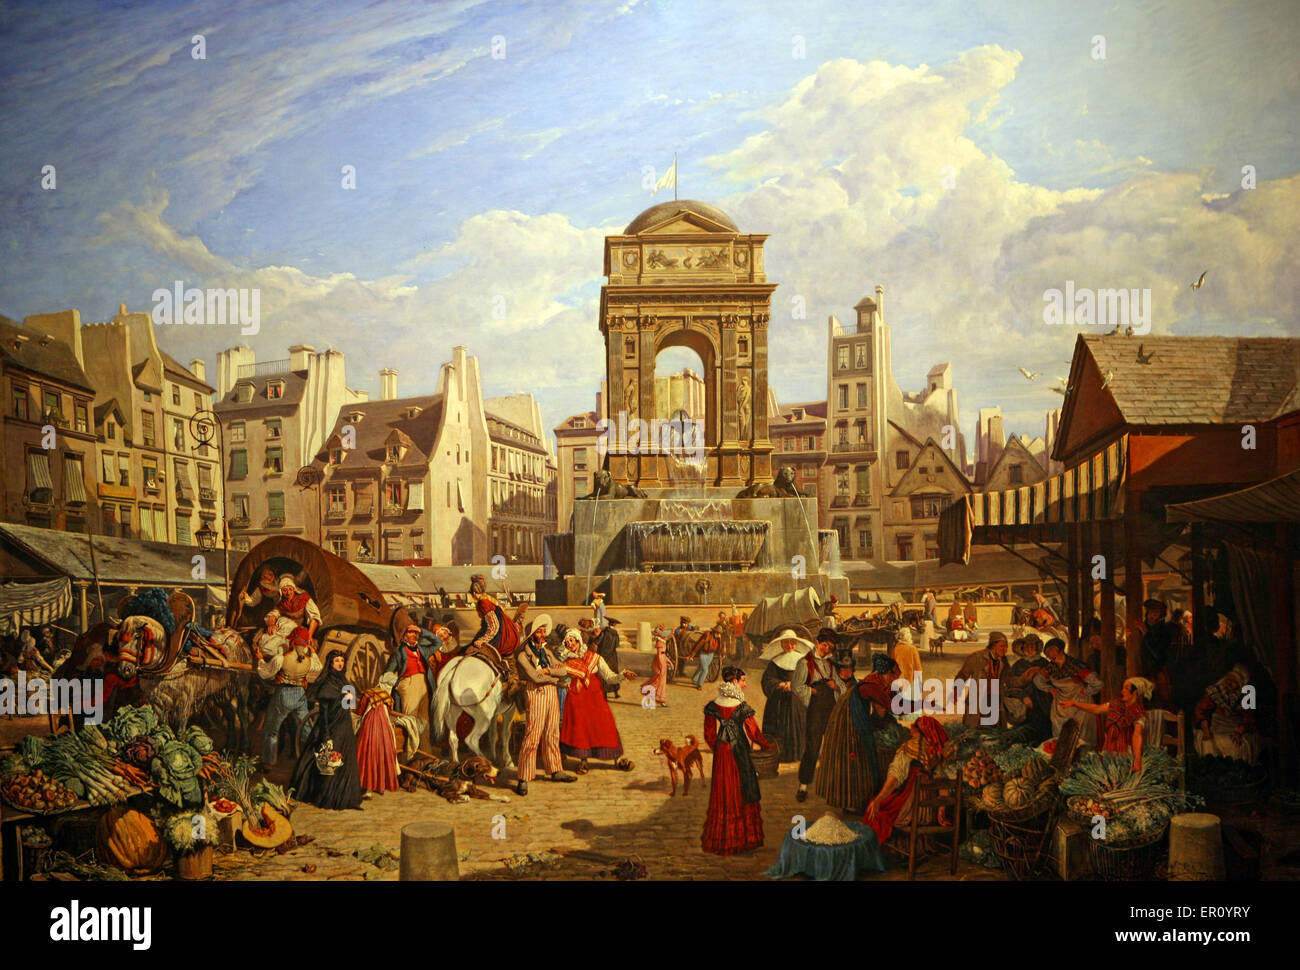 John James Chalon - Le Marche et la fontaine des innocents en 1822 The market and fountain of the innocent in 1822 Stock Photo